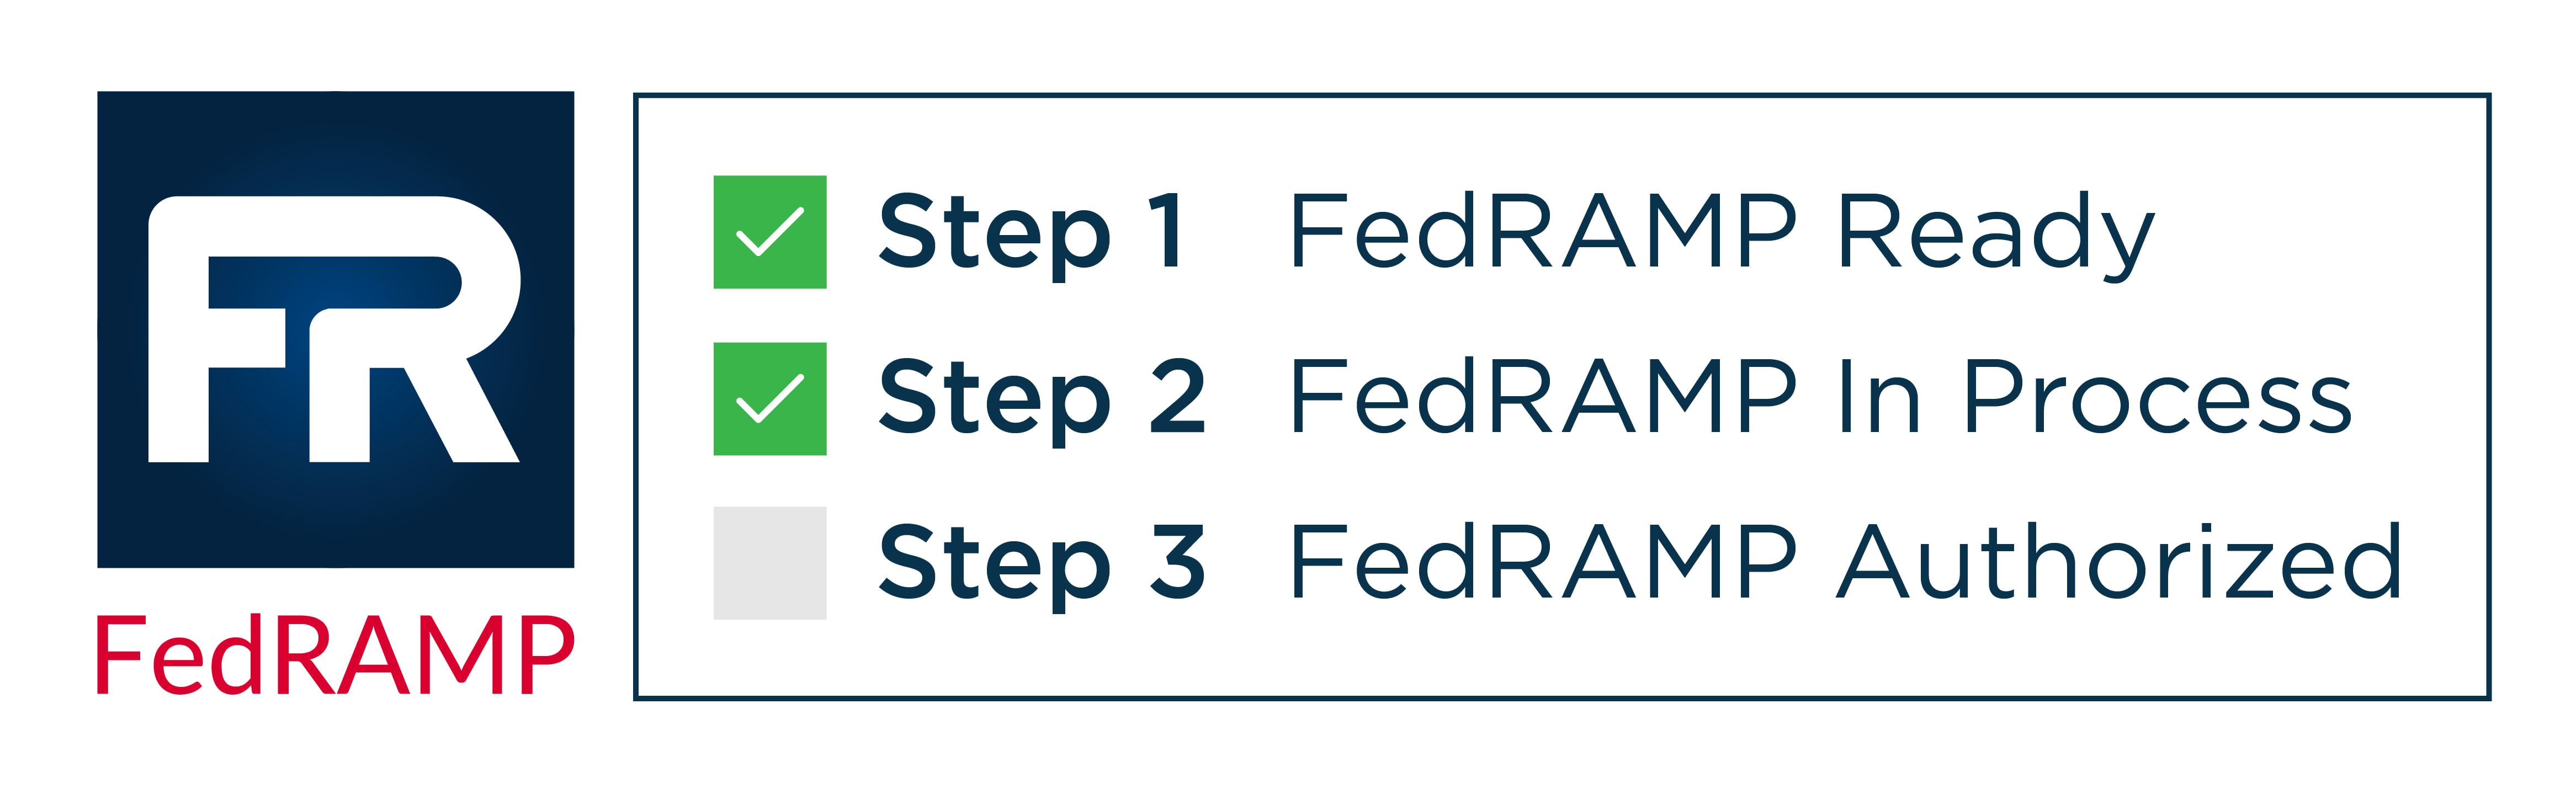 FedRAMP levels of readiness designation